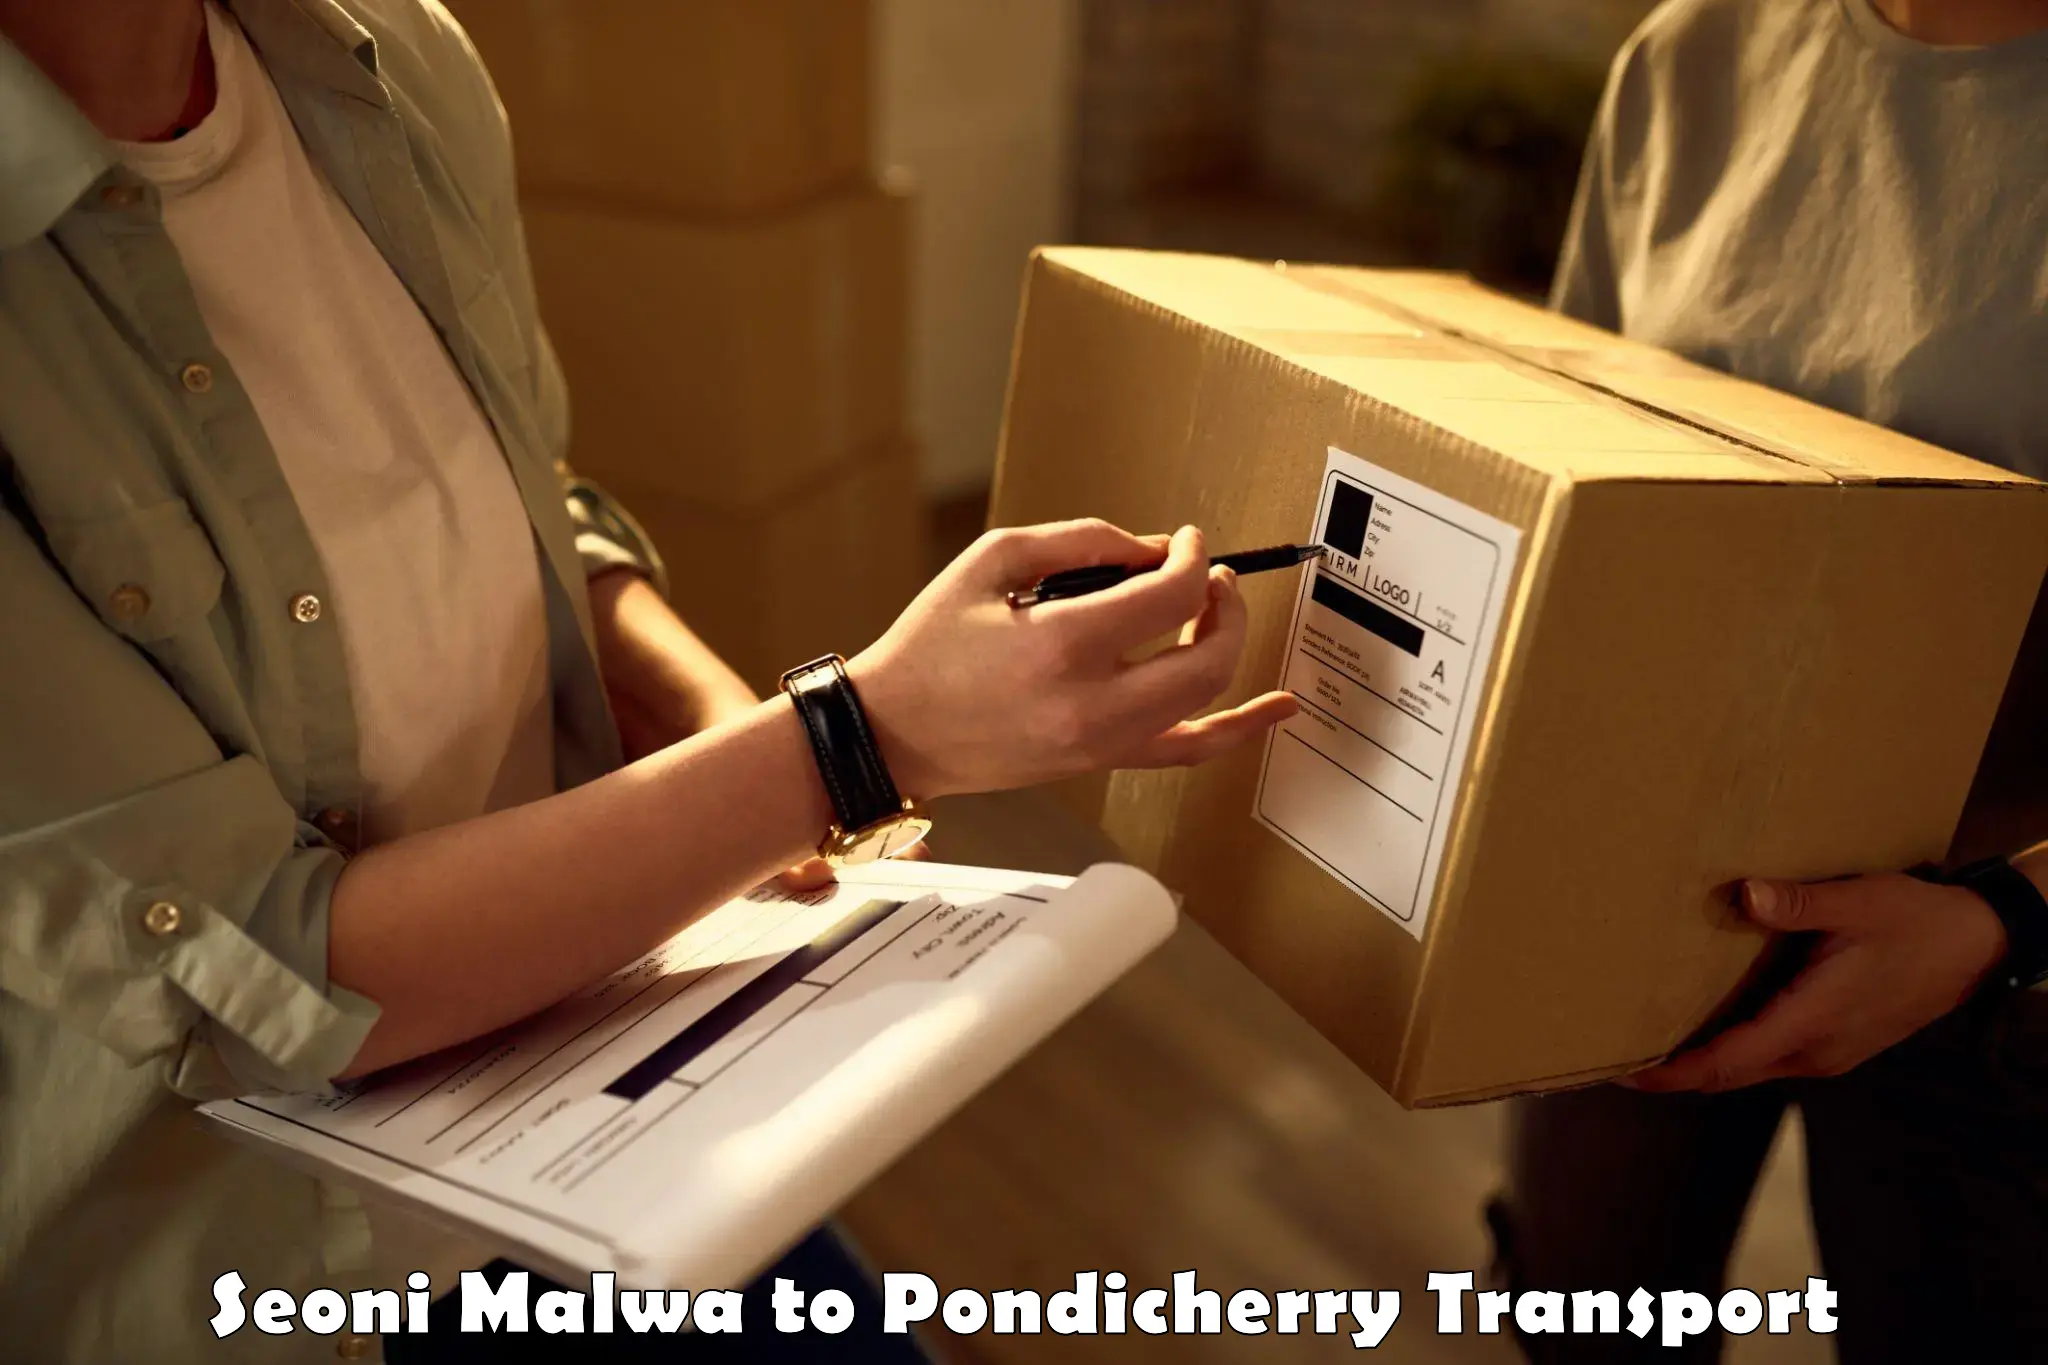 Transport in sharing Seoni Malwa to Pondicherry